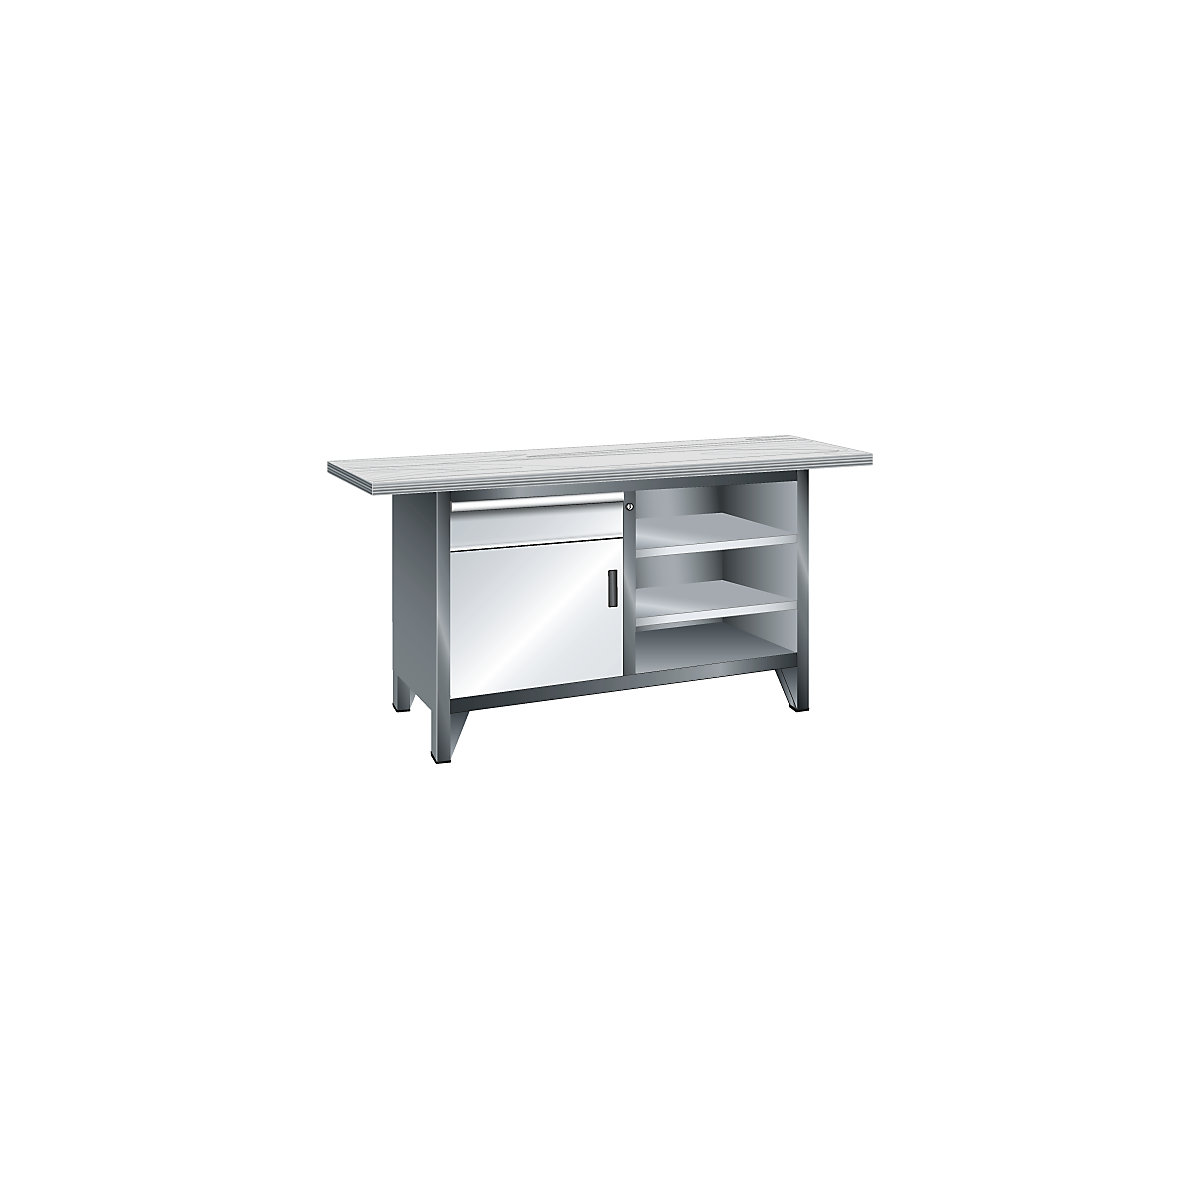 Workbench width 1500 mm, frame construction – LISTA, 3 shelves, 1 drawer, 1 door, body grey metallic, front light grey-7